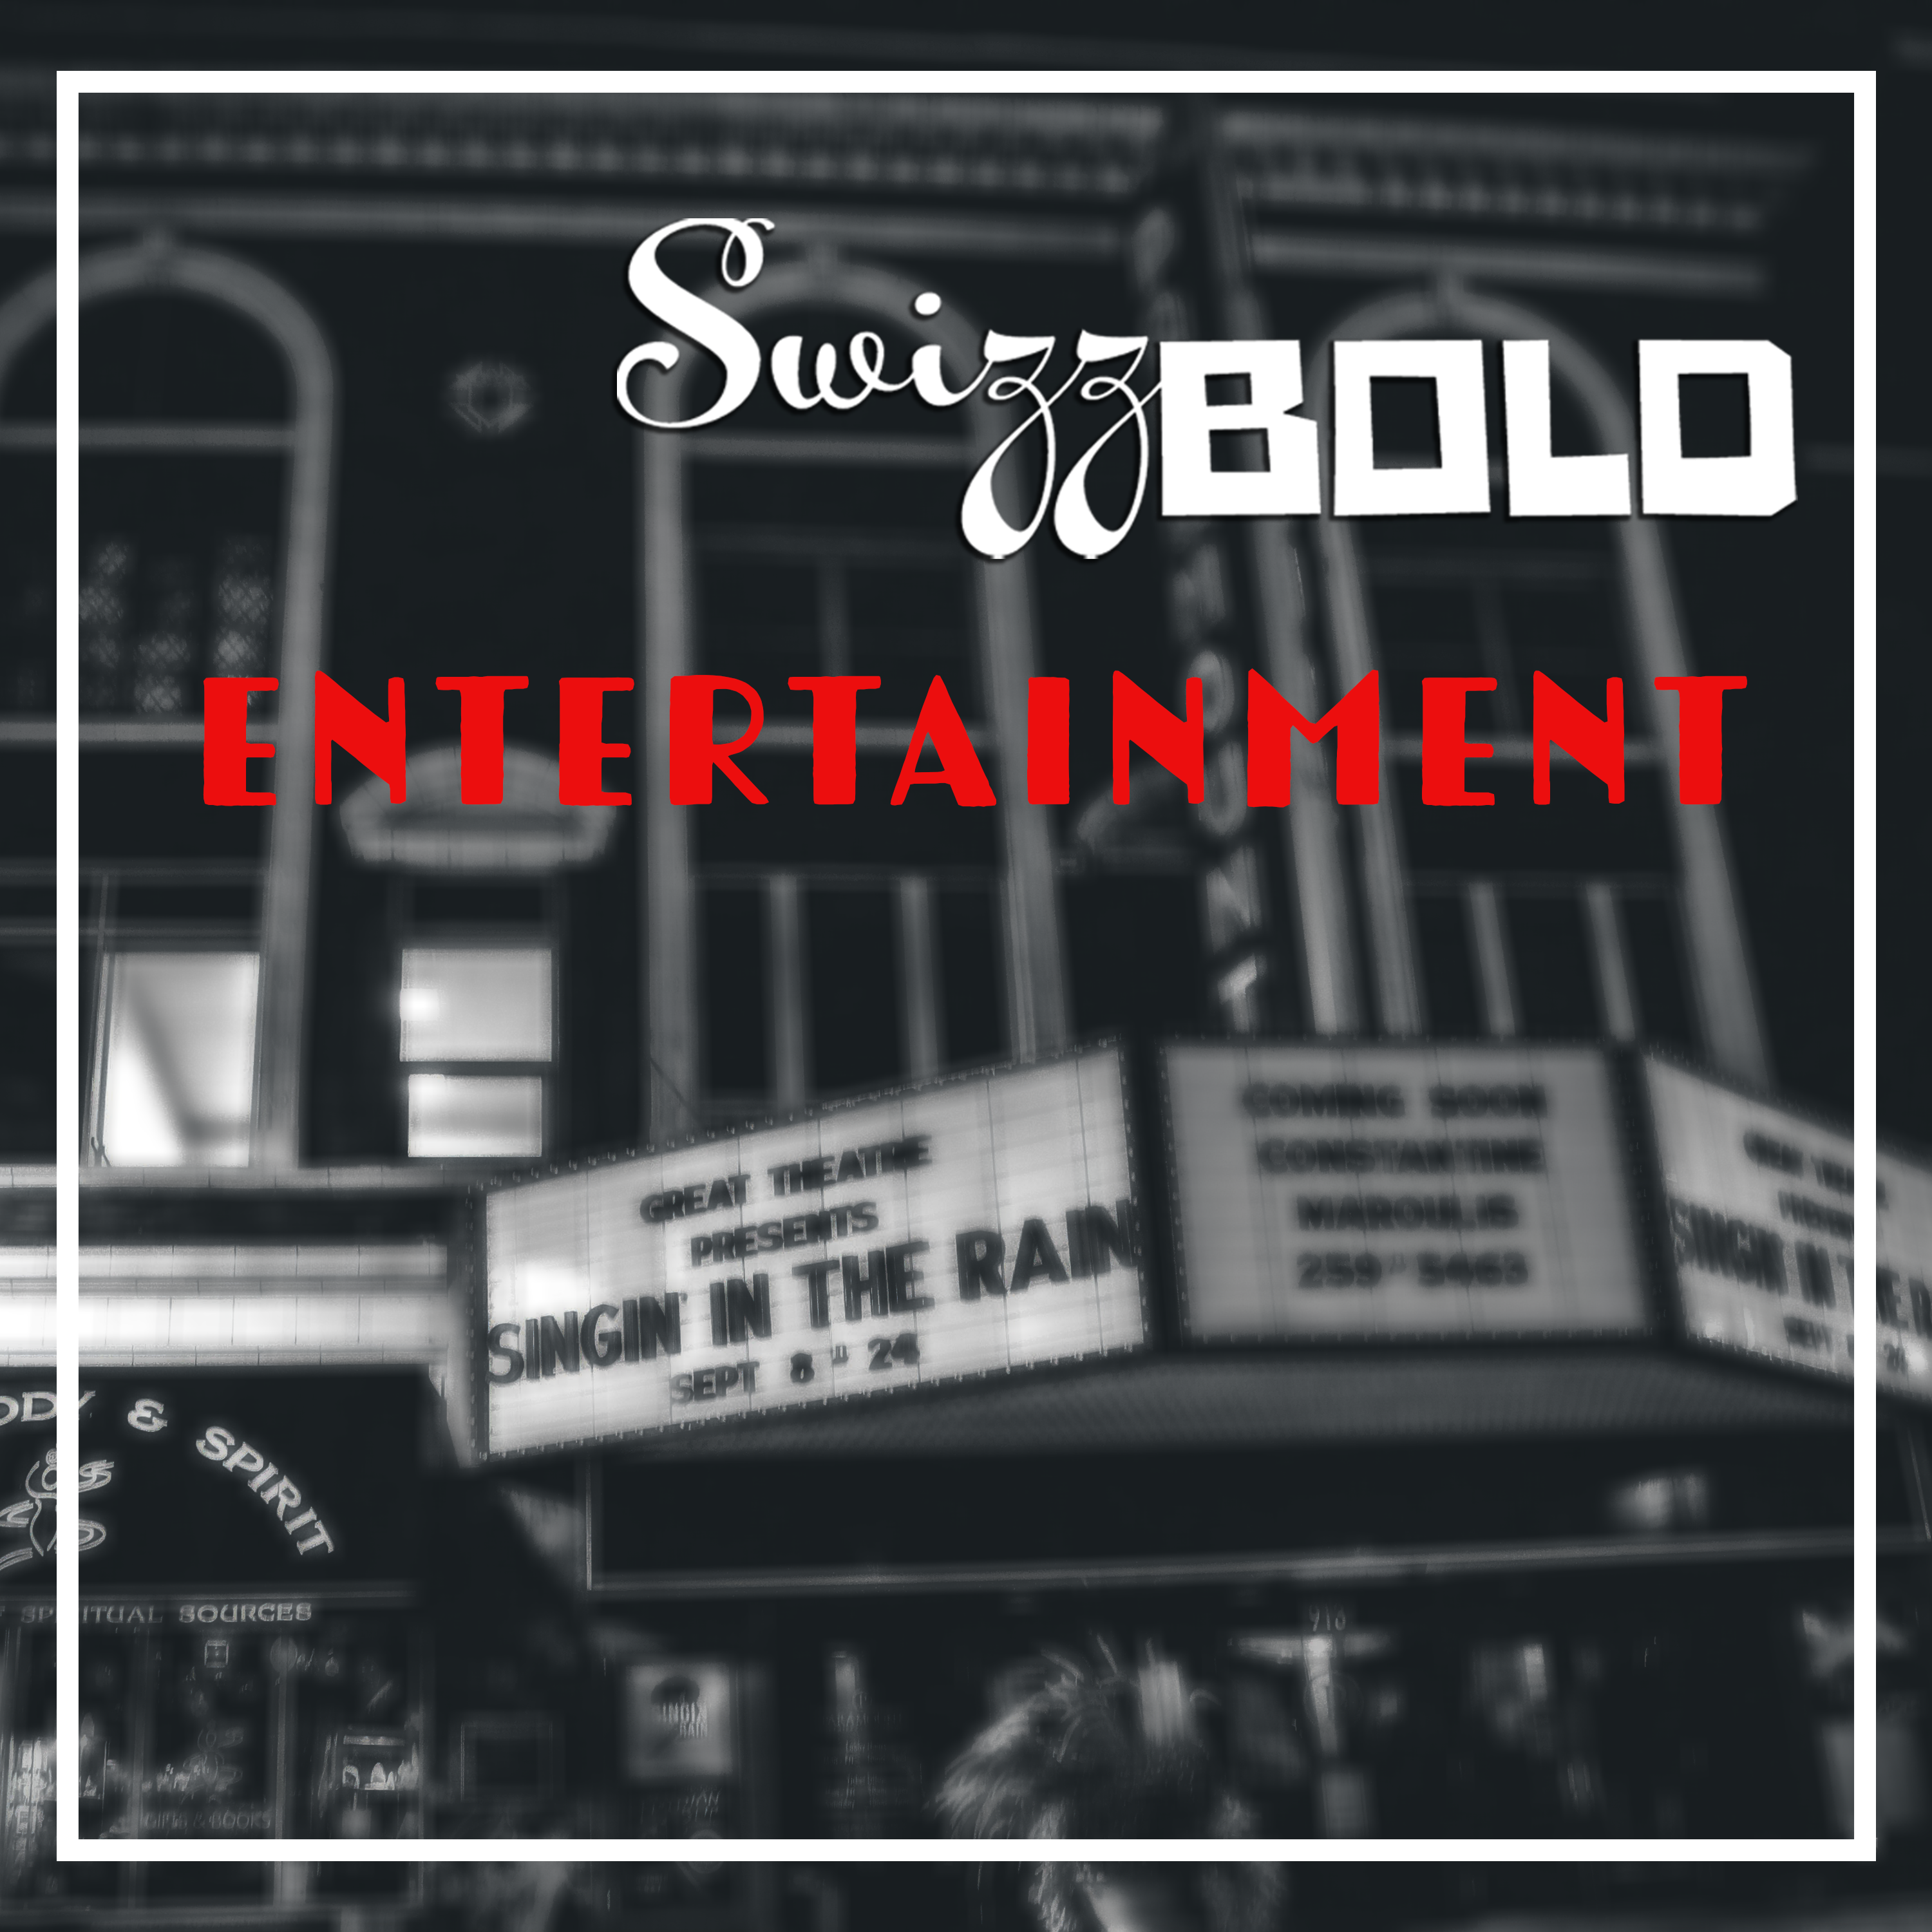 Swizzbold Entertainment